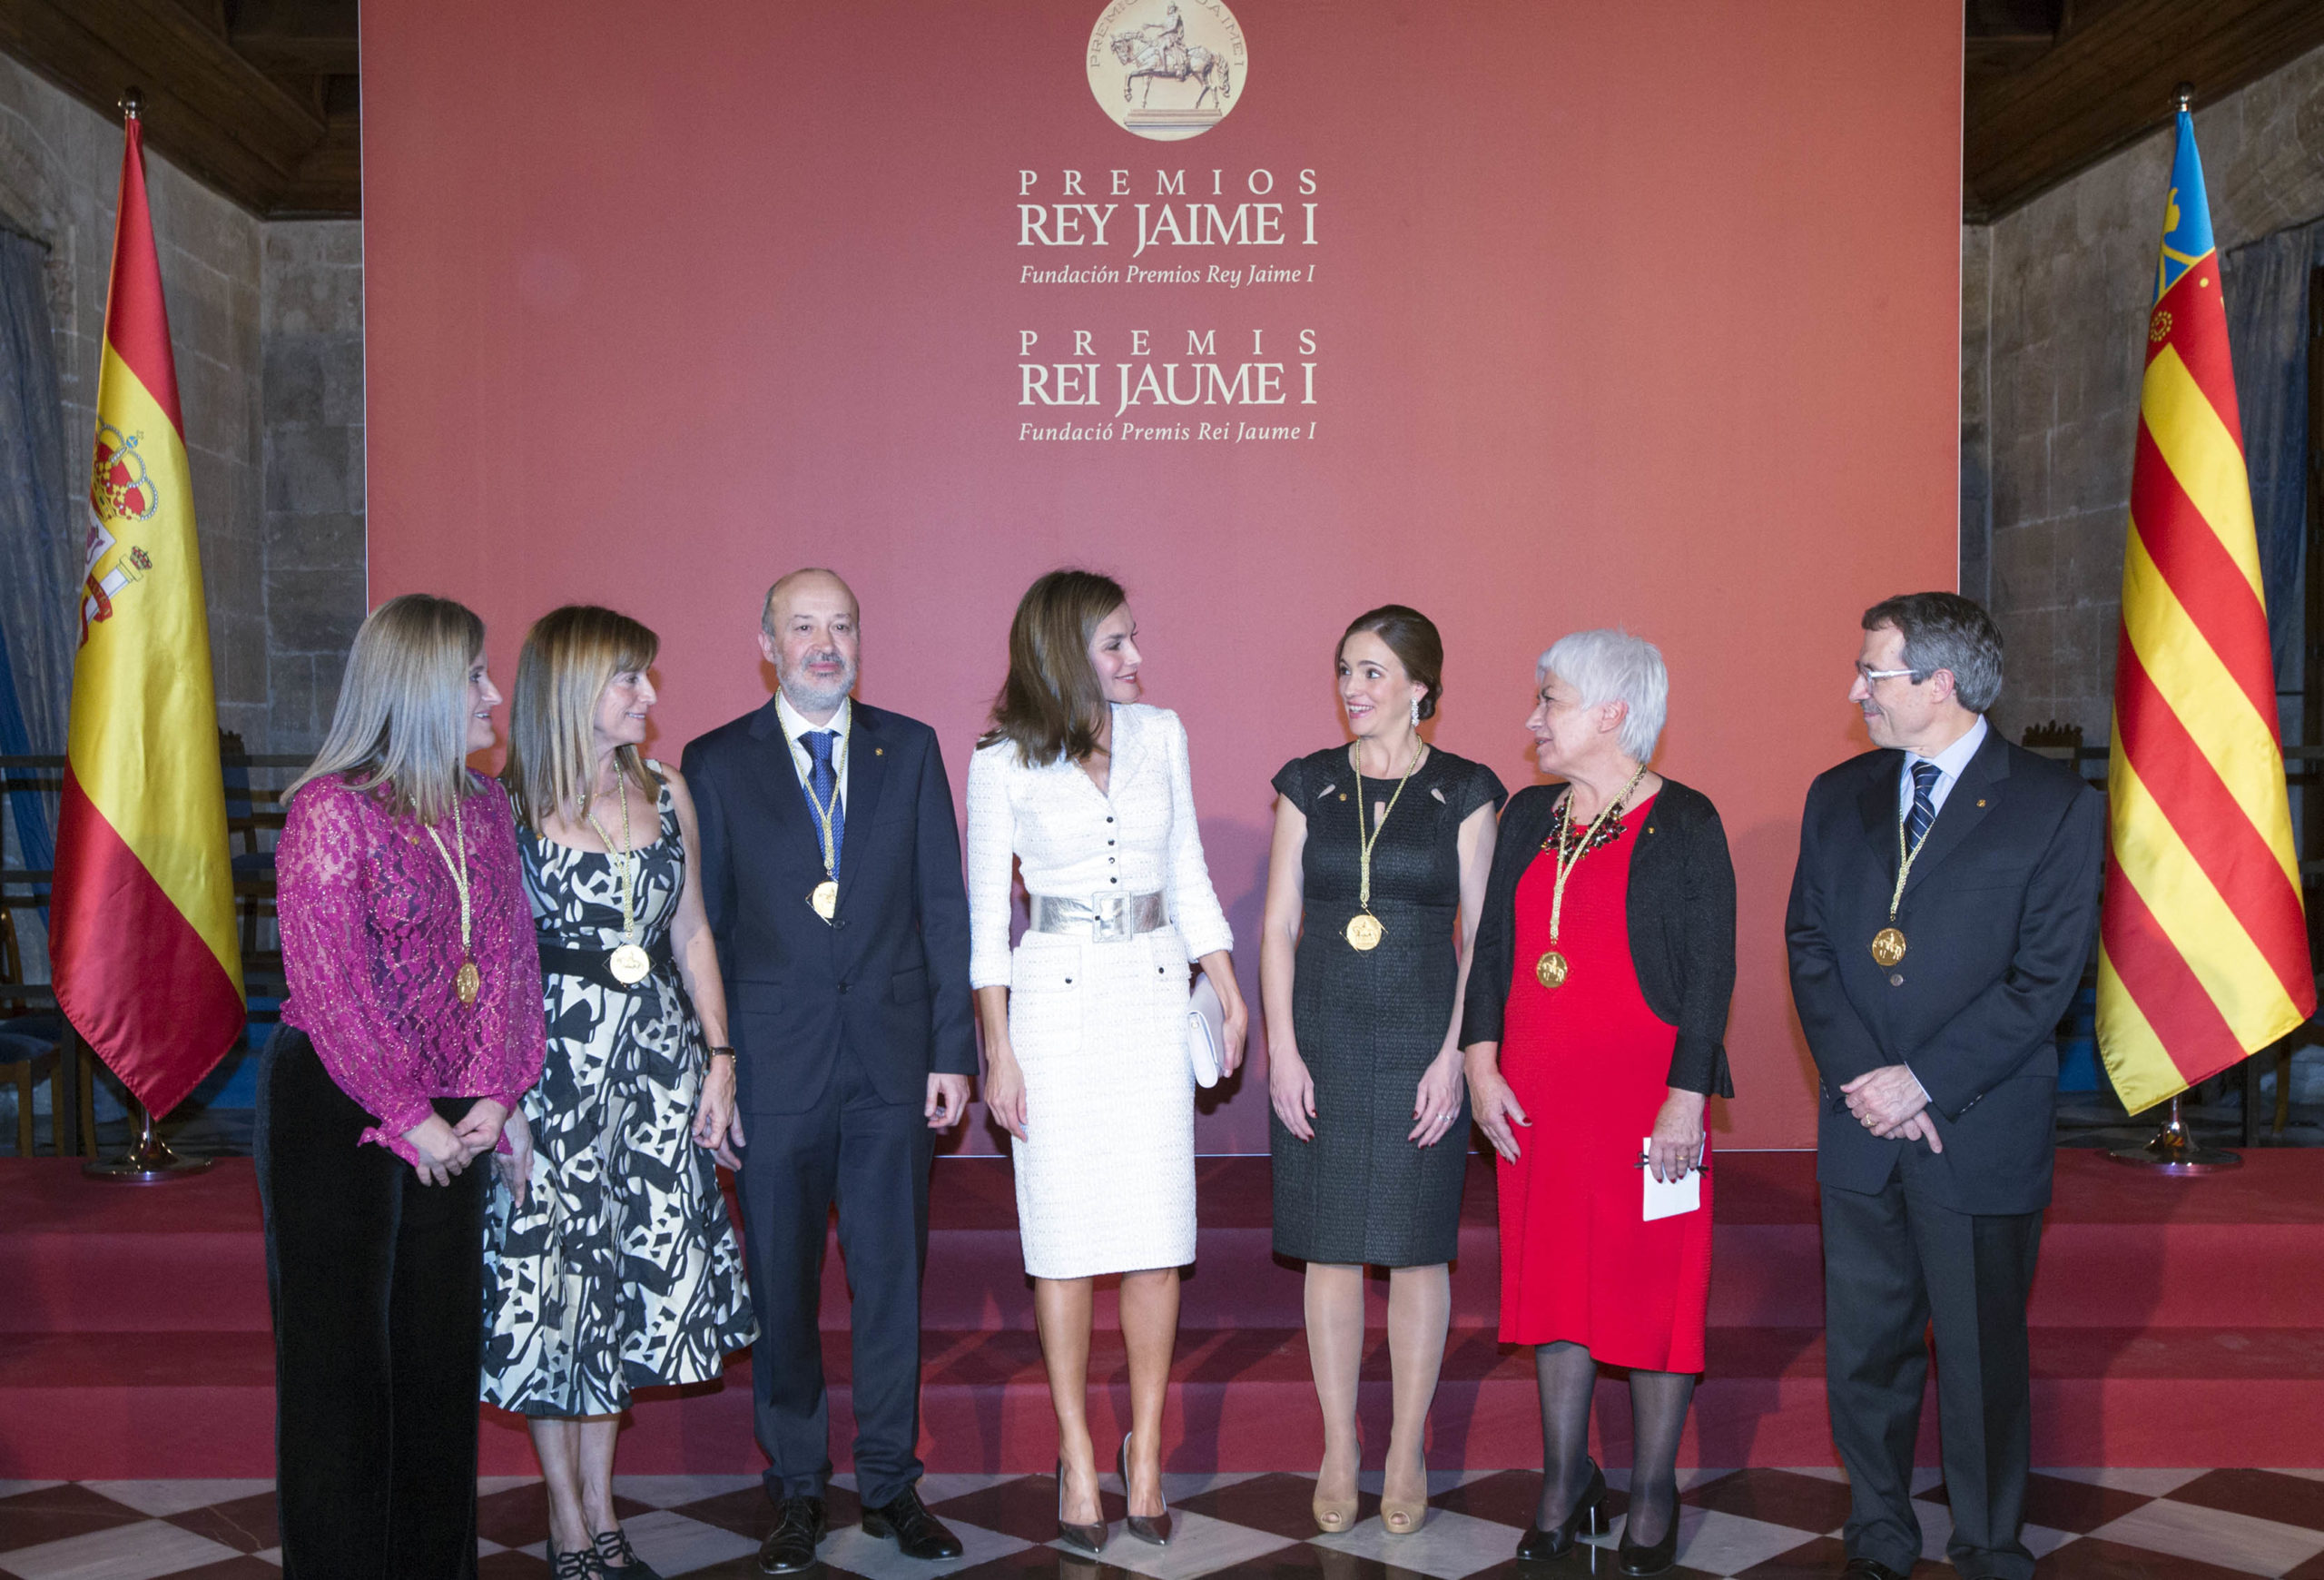 La reina Letizia presidirá la ceremonia de entrega de los premios